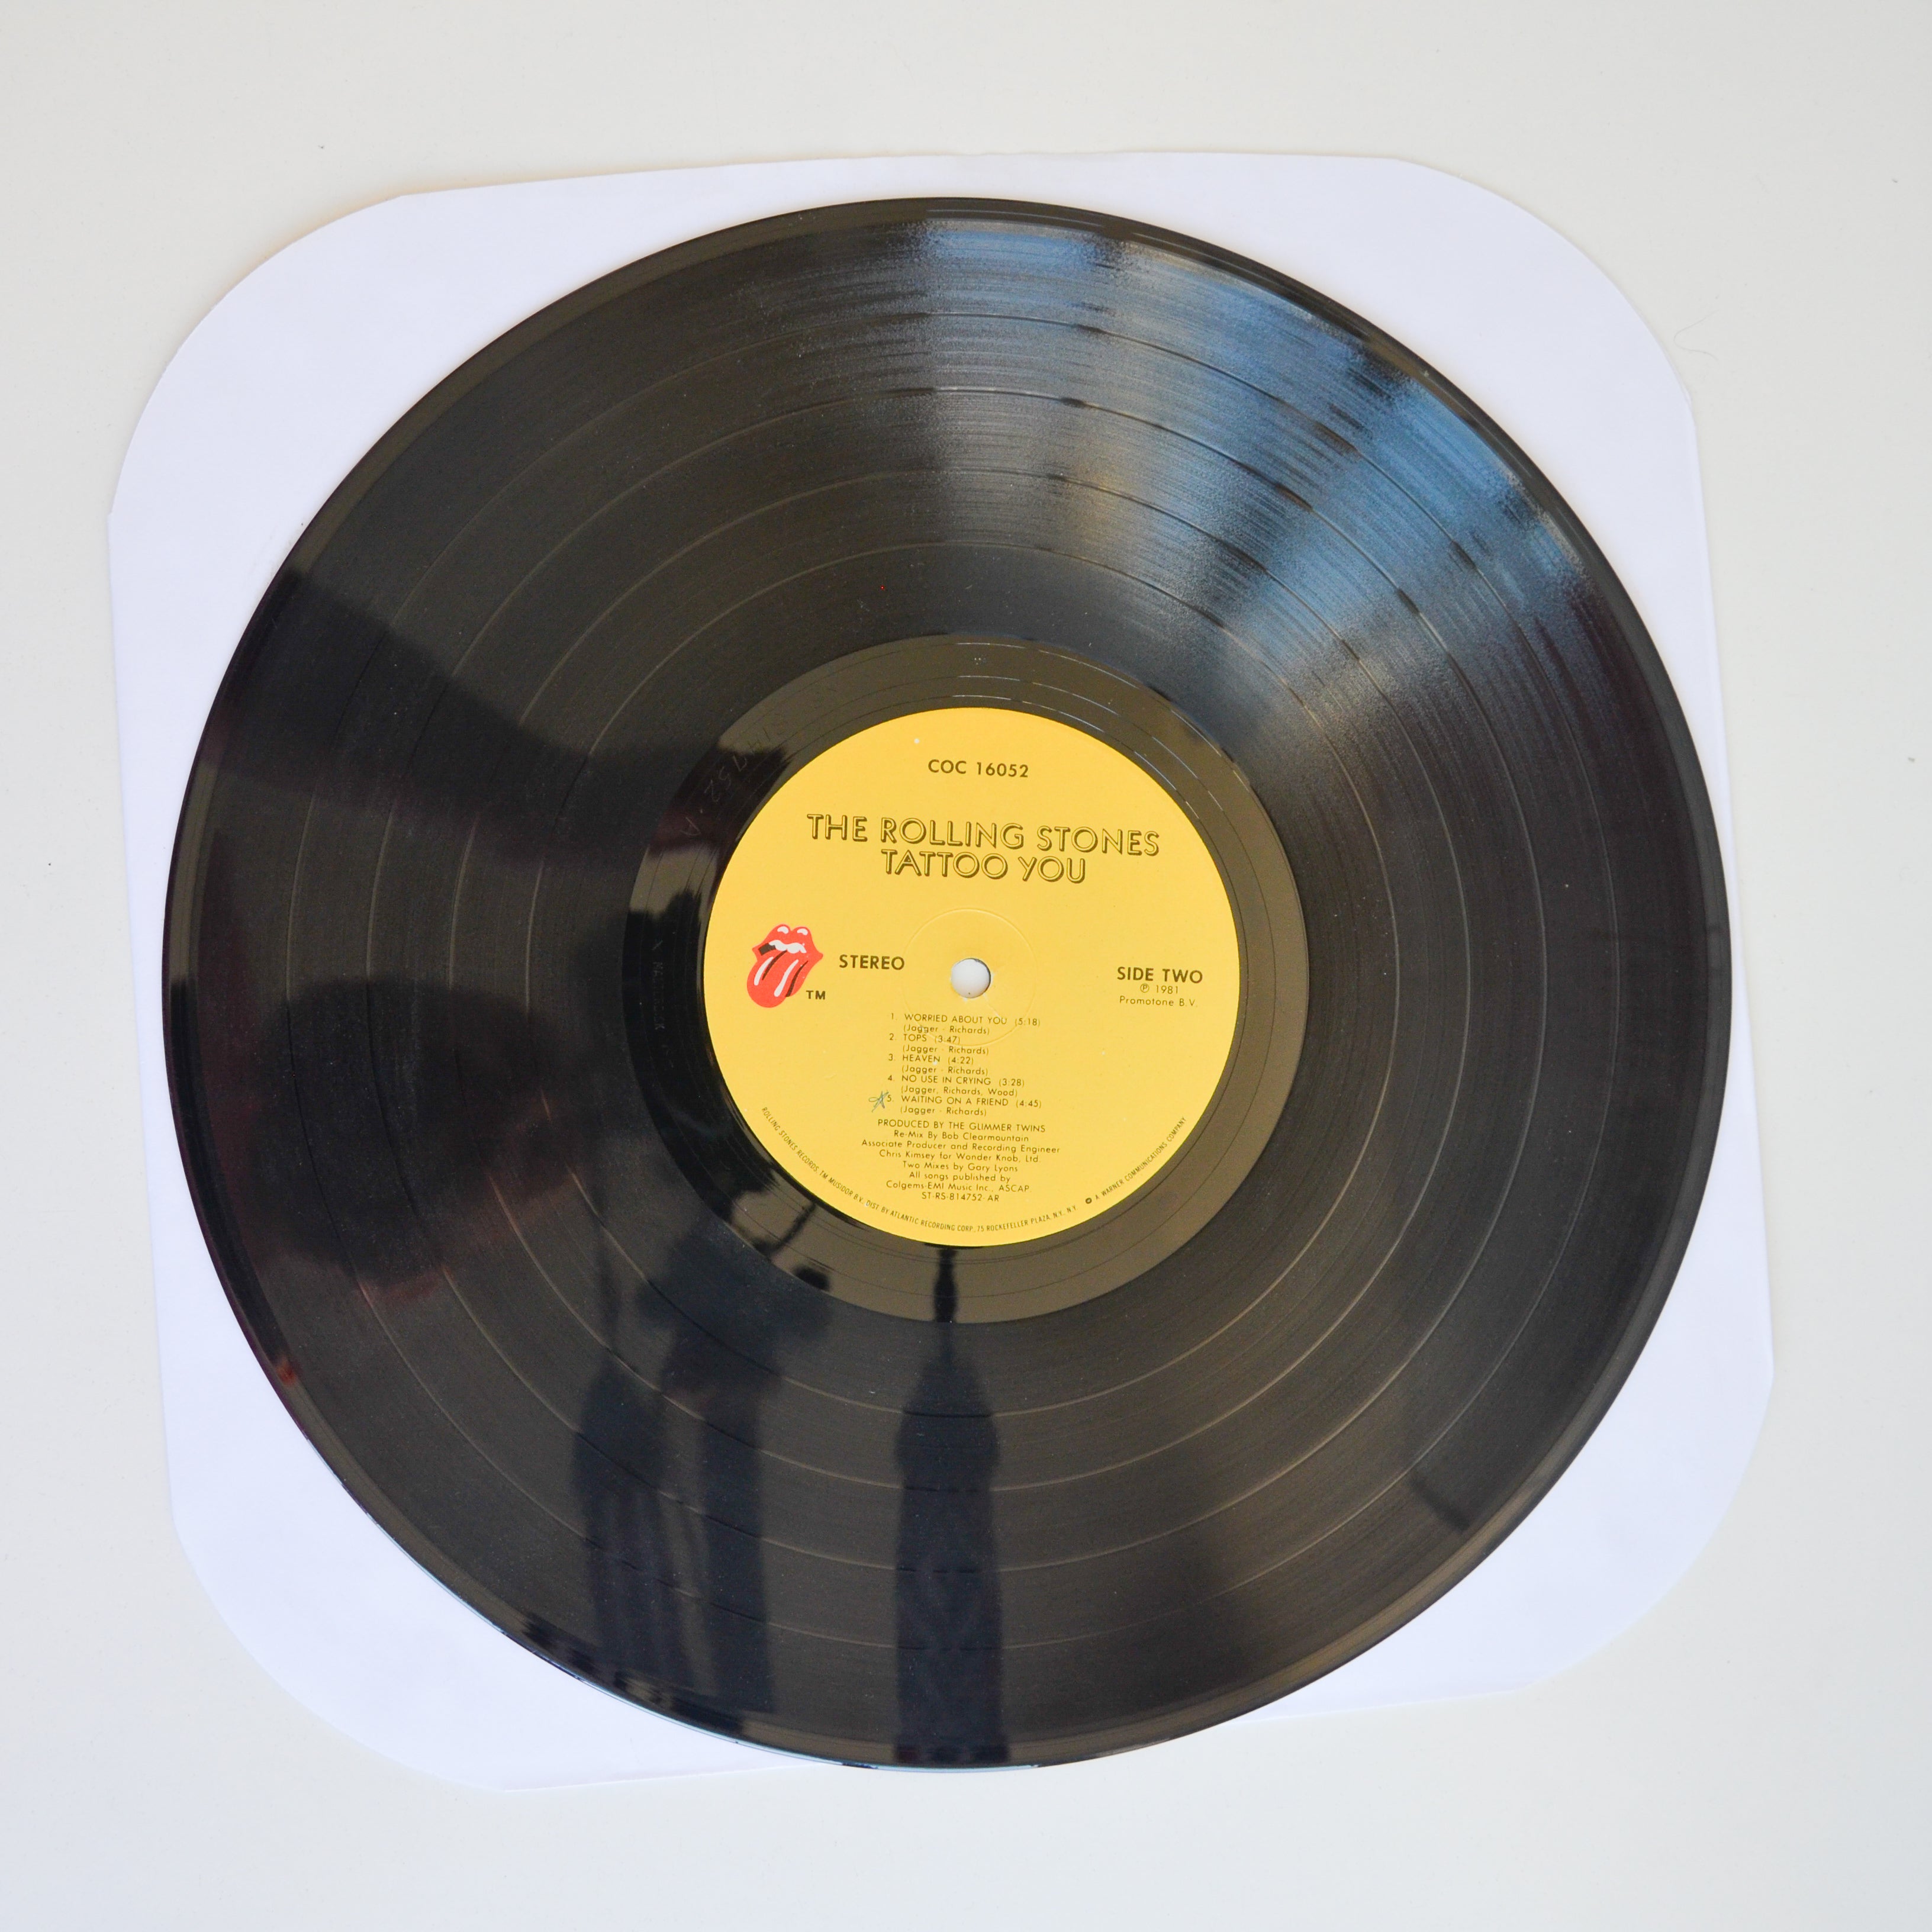 TATTOO YOU - 1981 Music Cassette - Rolling Stones $9.99 - PicClick AU